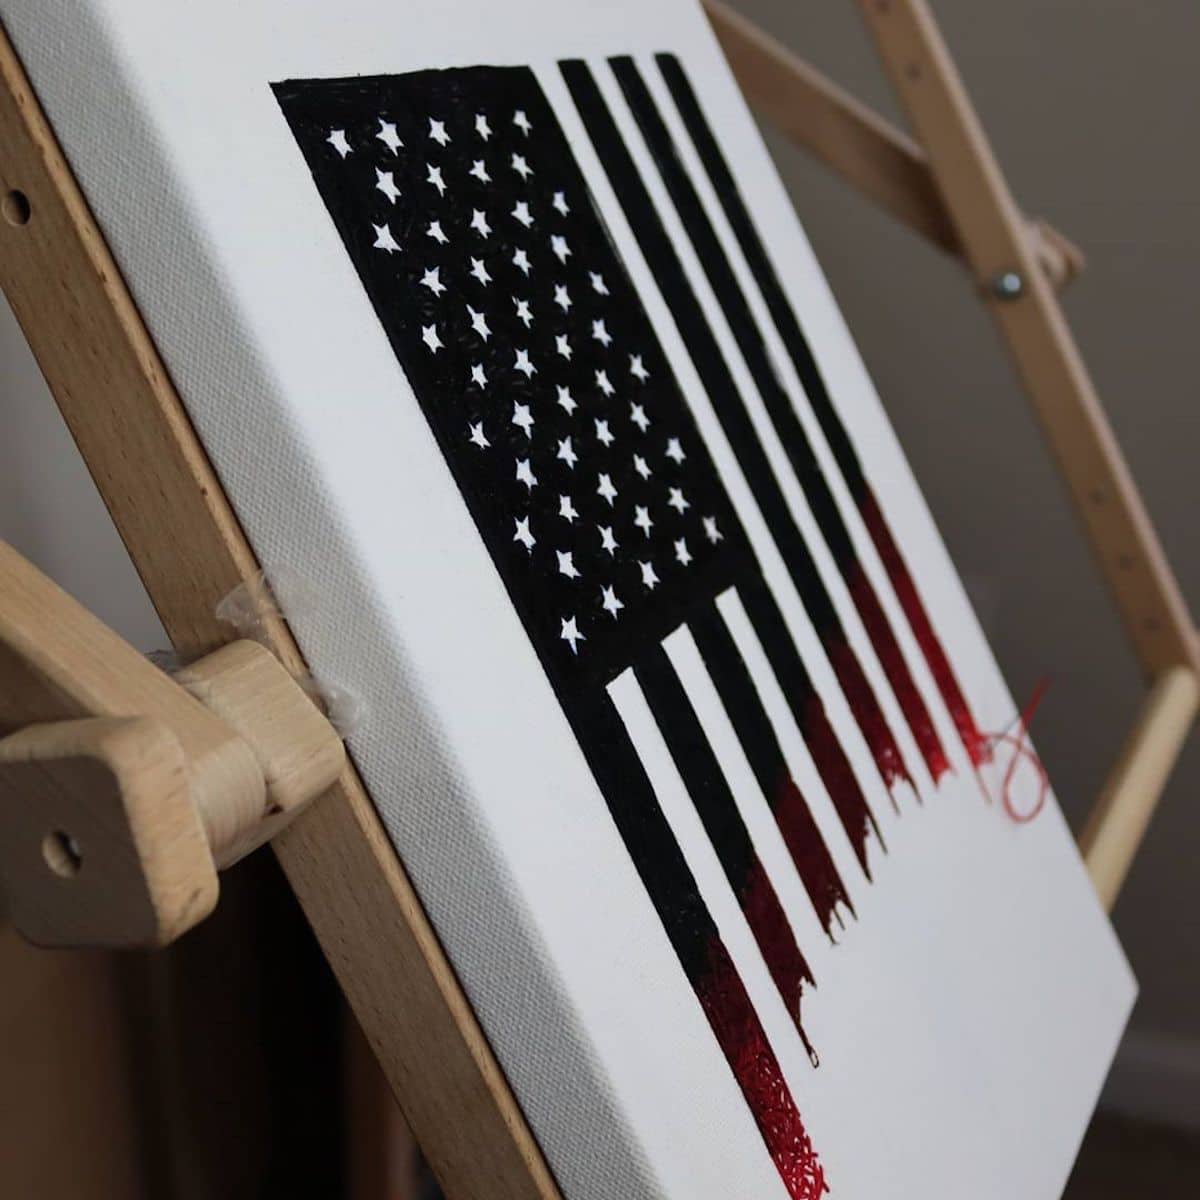 Nneka Jones Embroidering the U.S. Flag